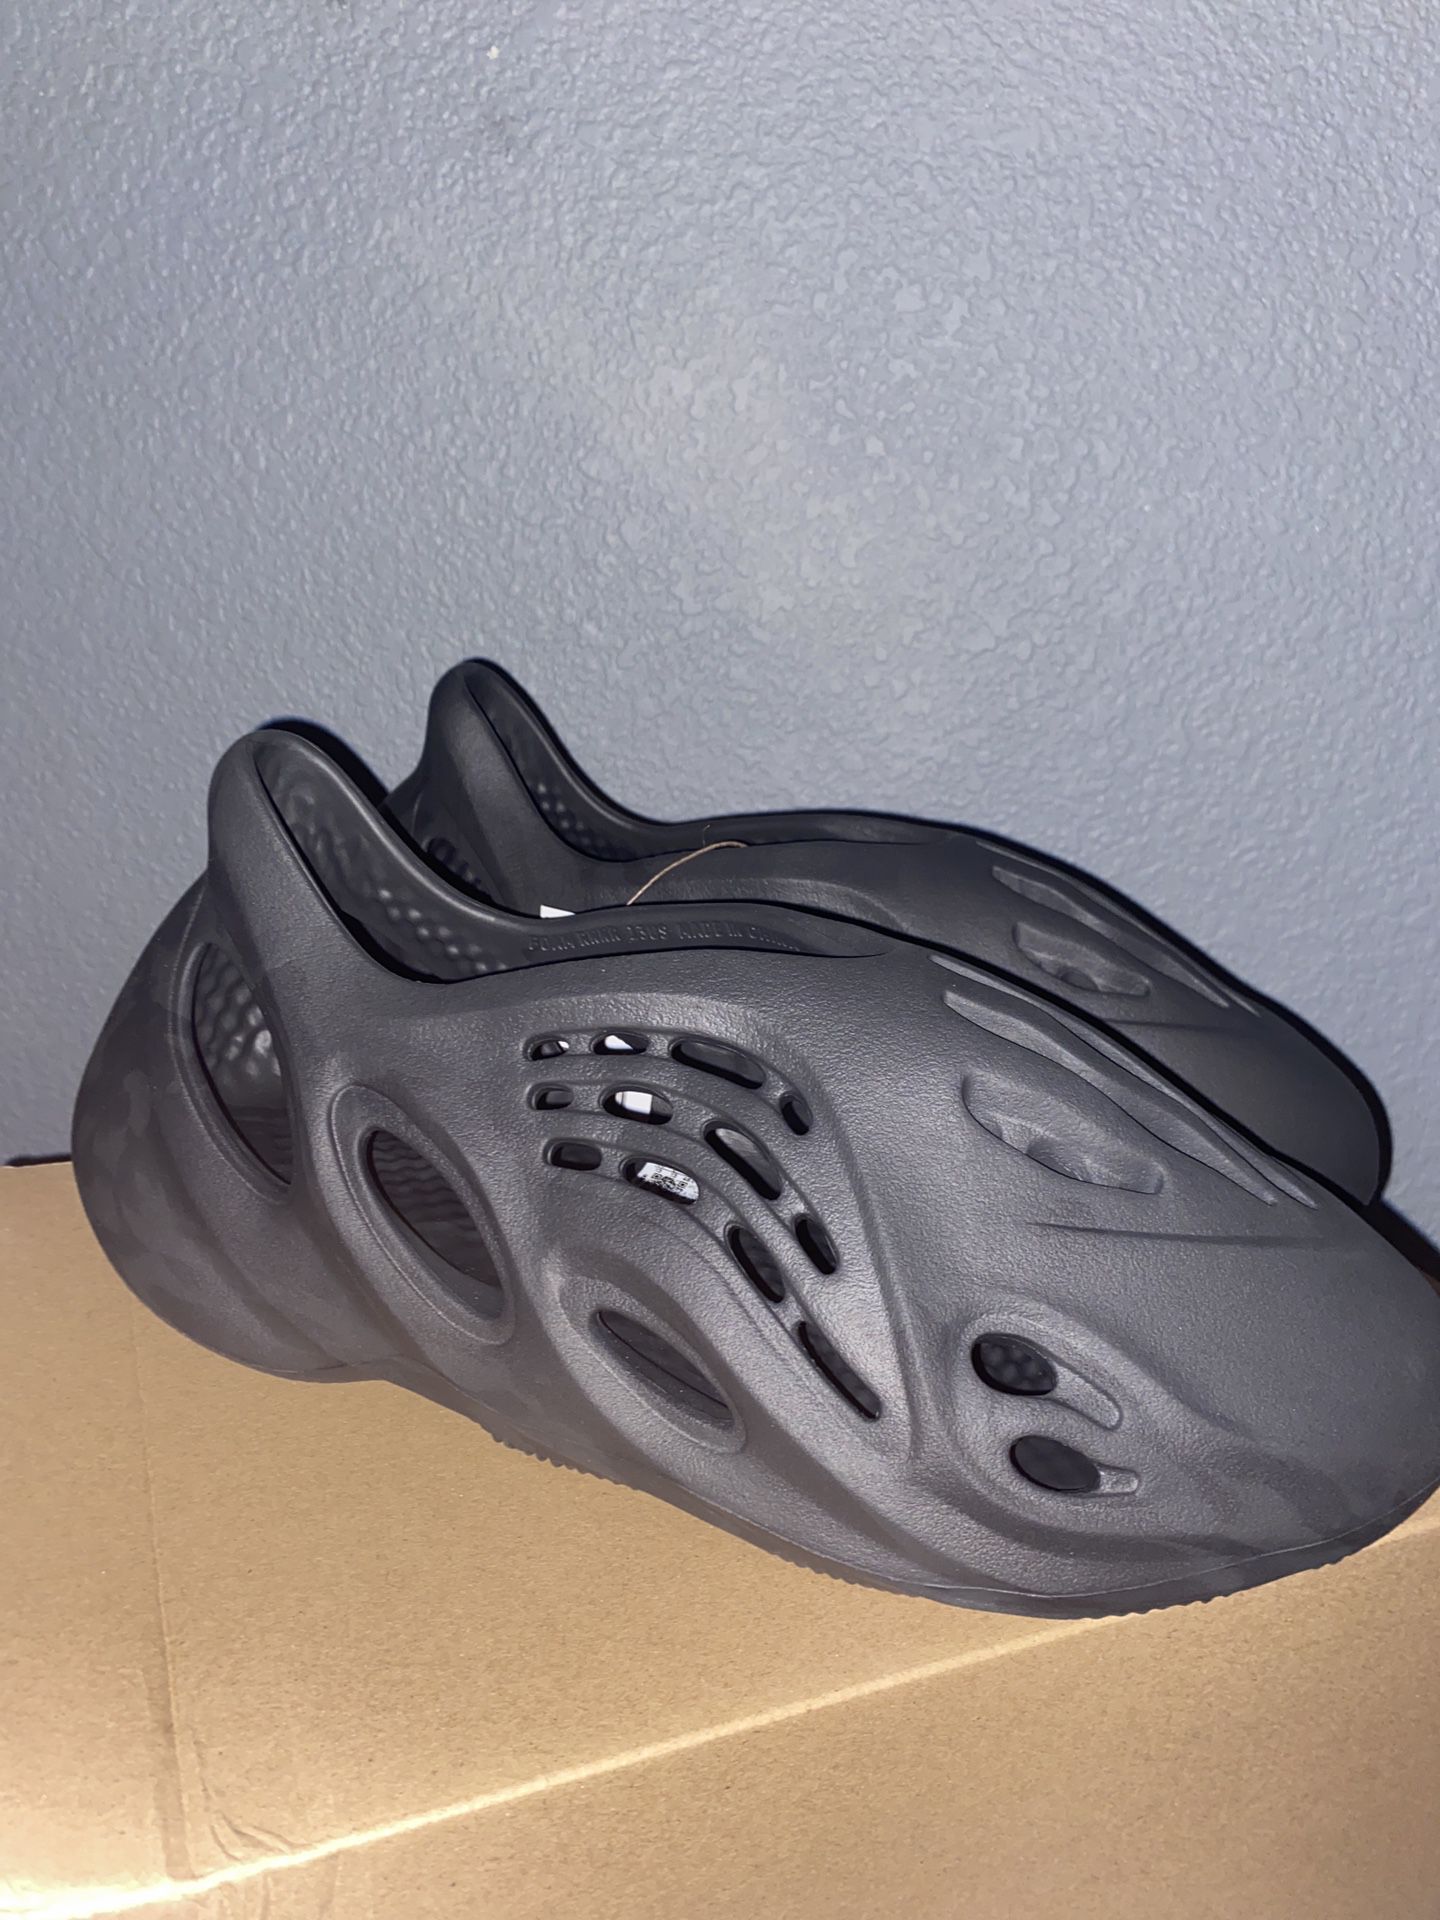 Adidas Yeezy Foam Runner Onyx Size 13